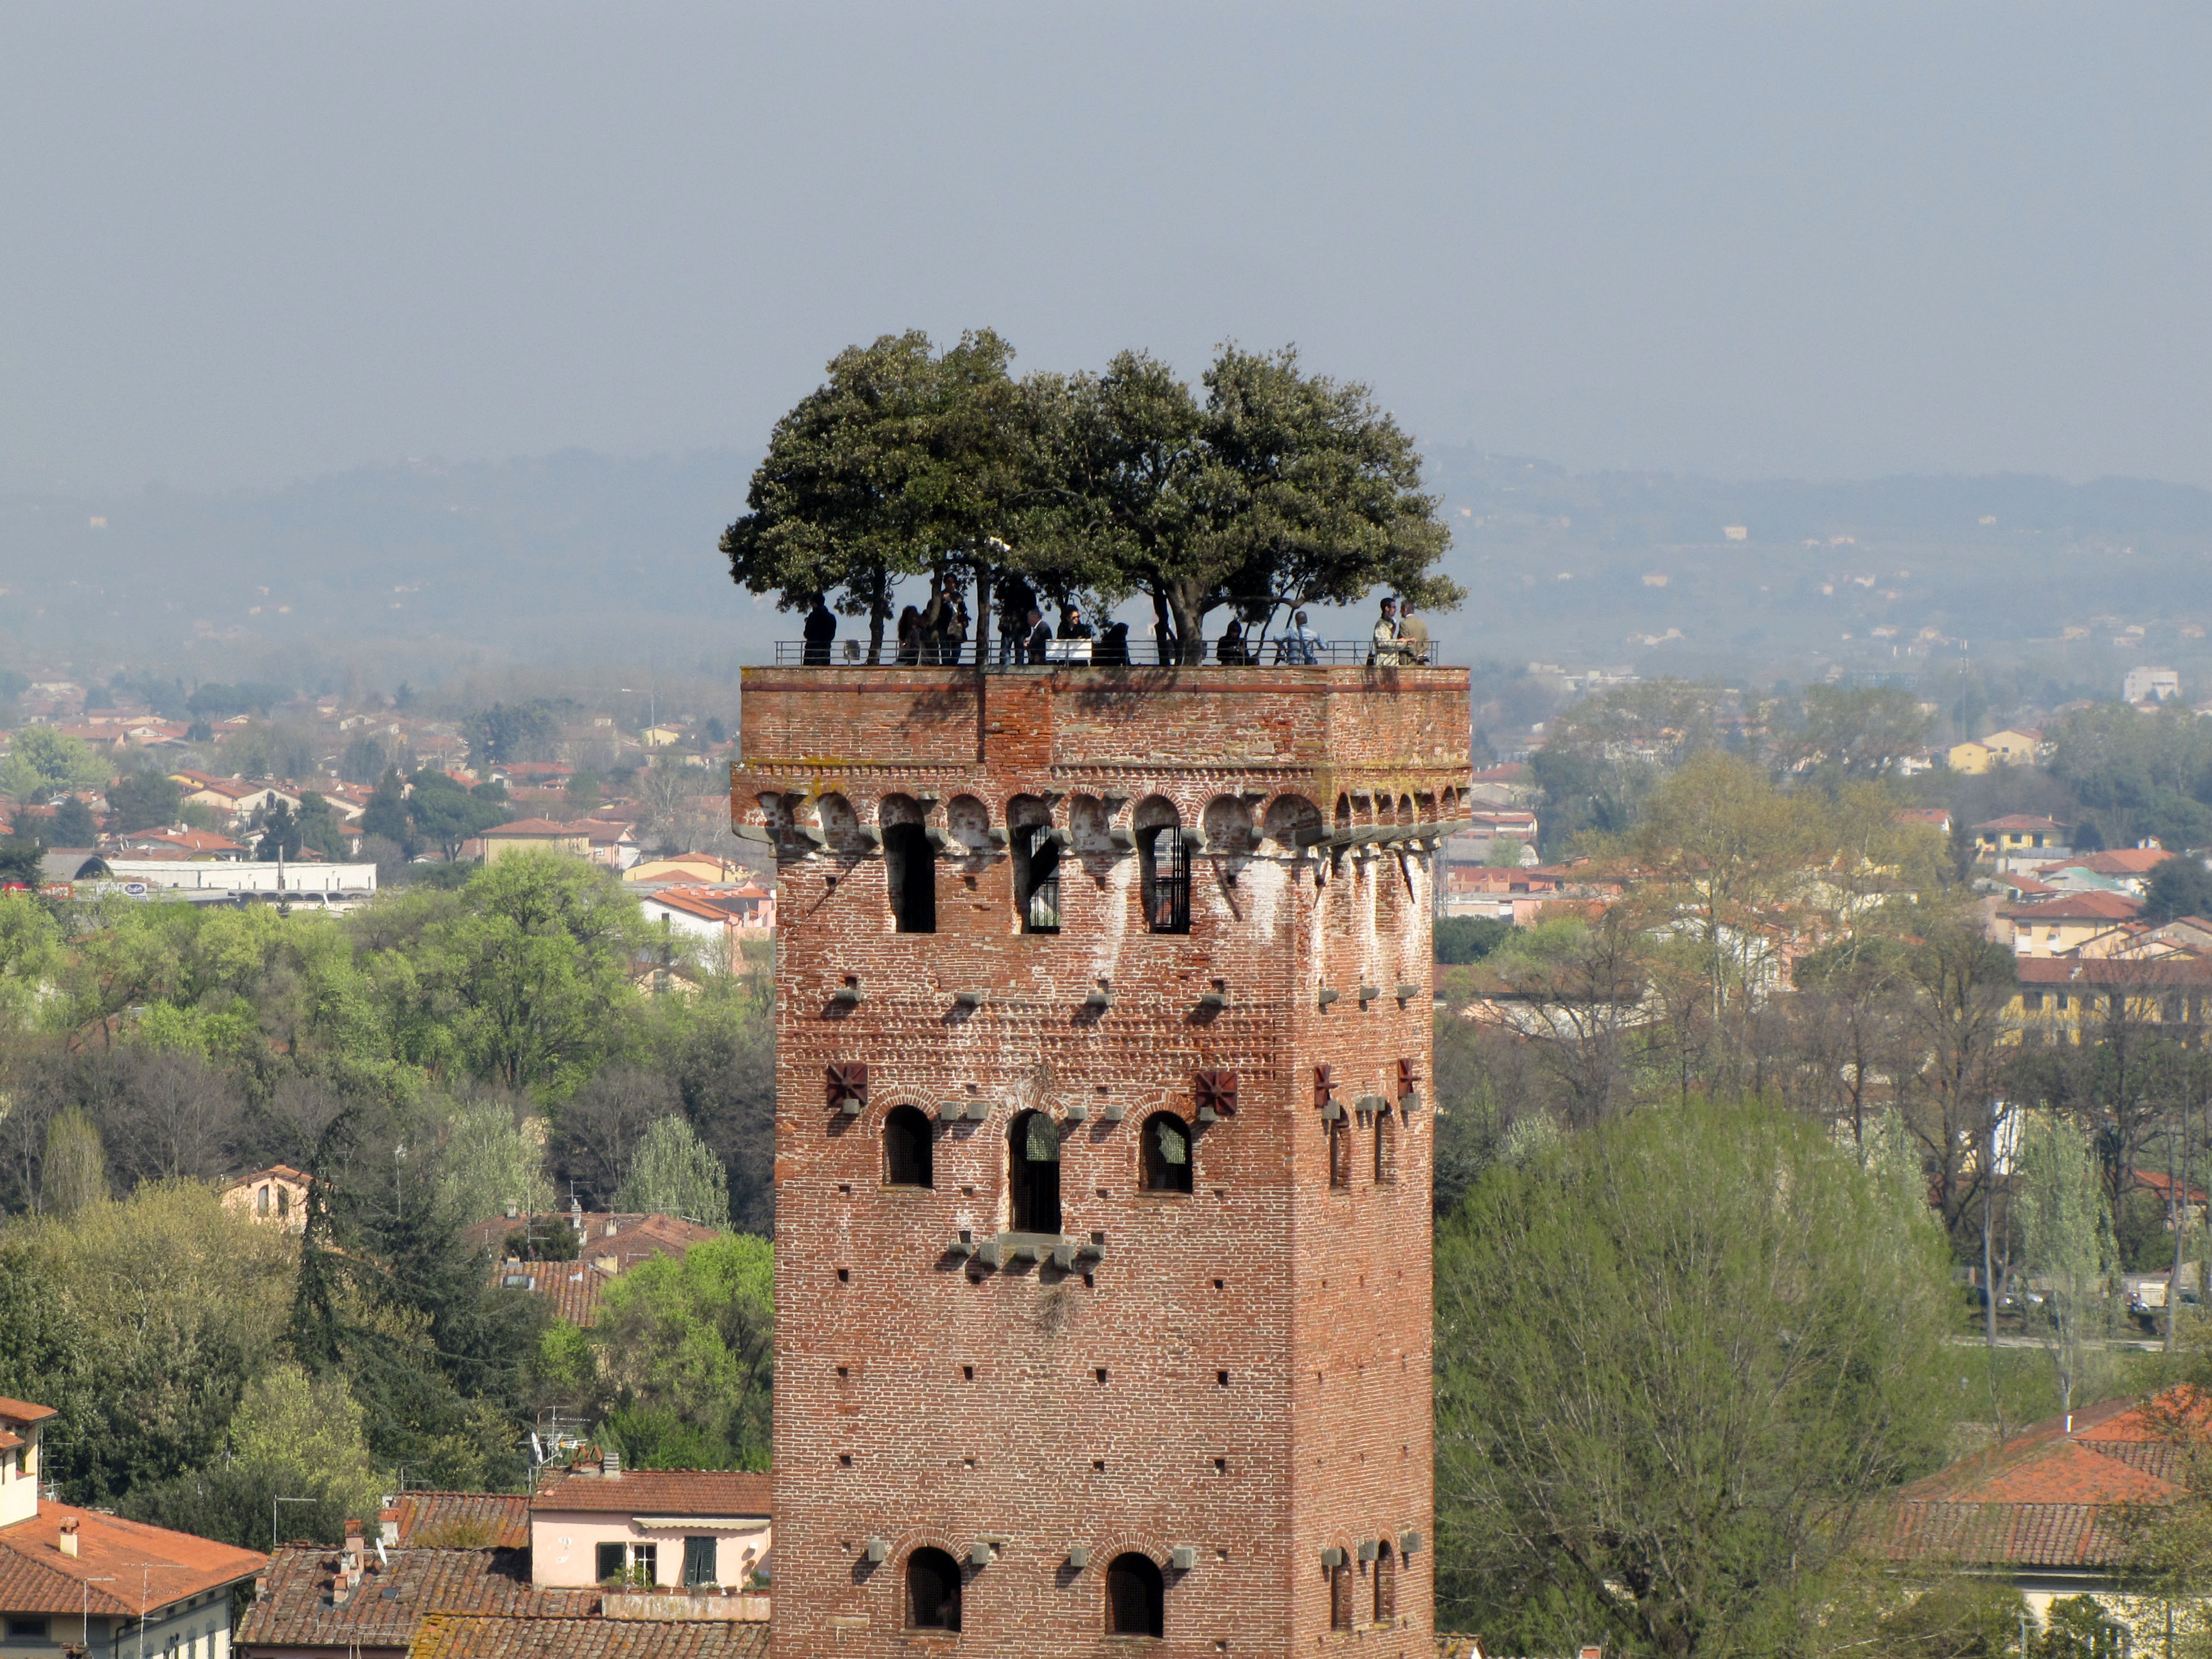 Torre Guinigi di Lucca